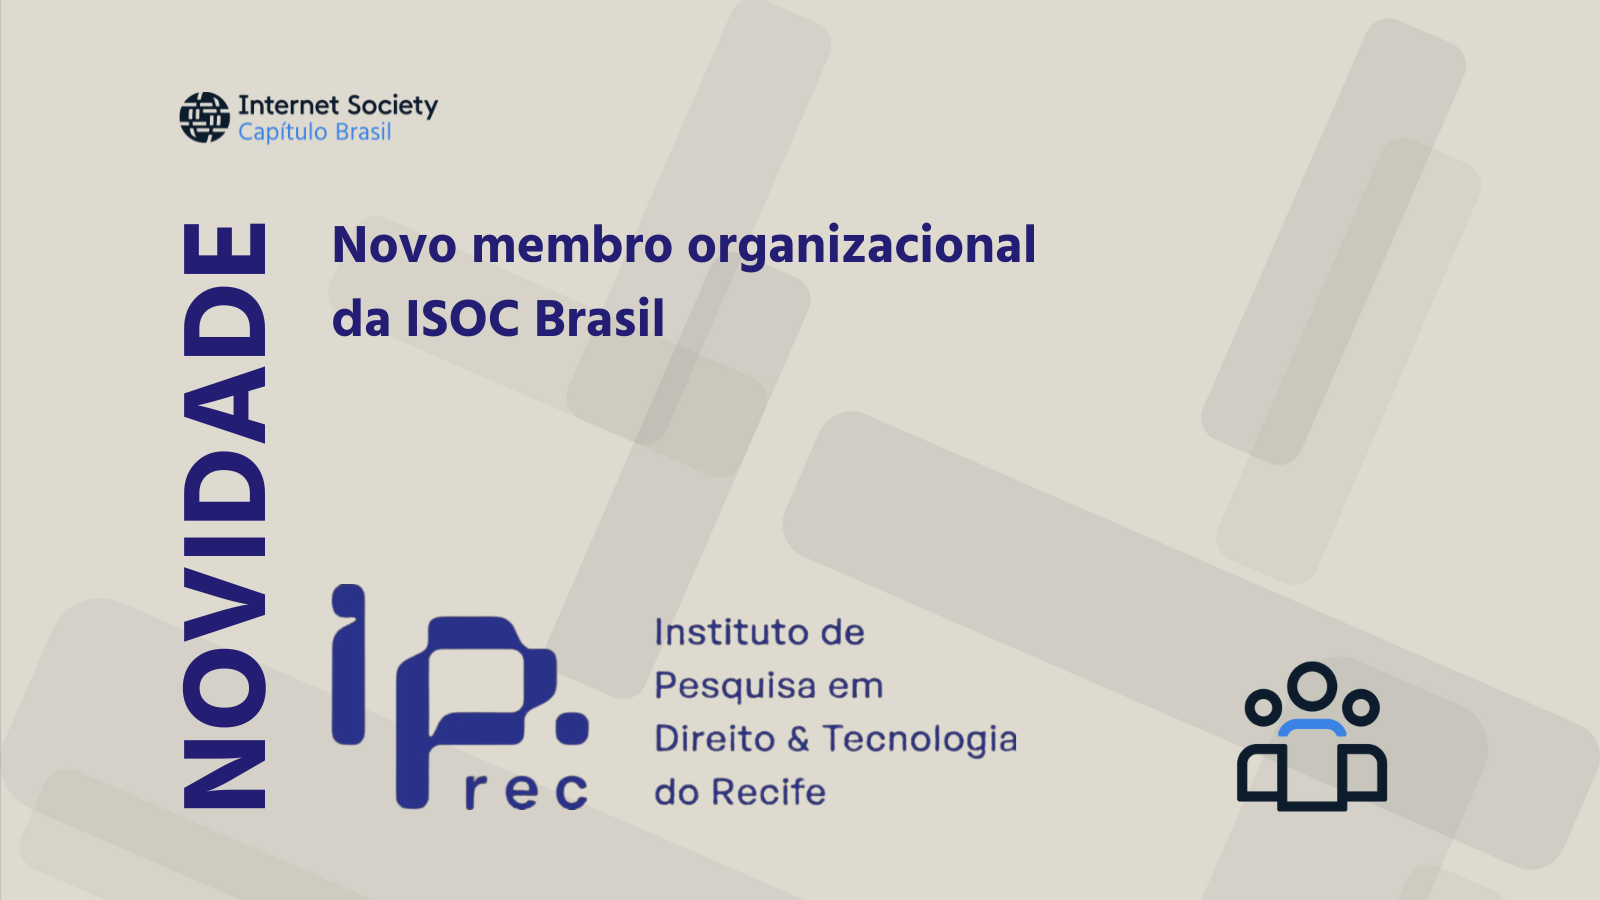 Novo Membro organizacional | IP.rec